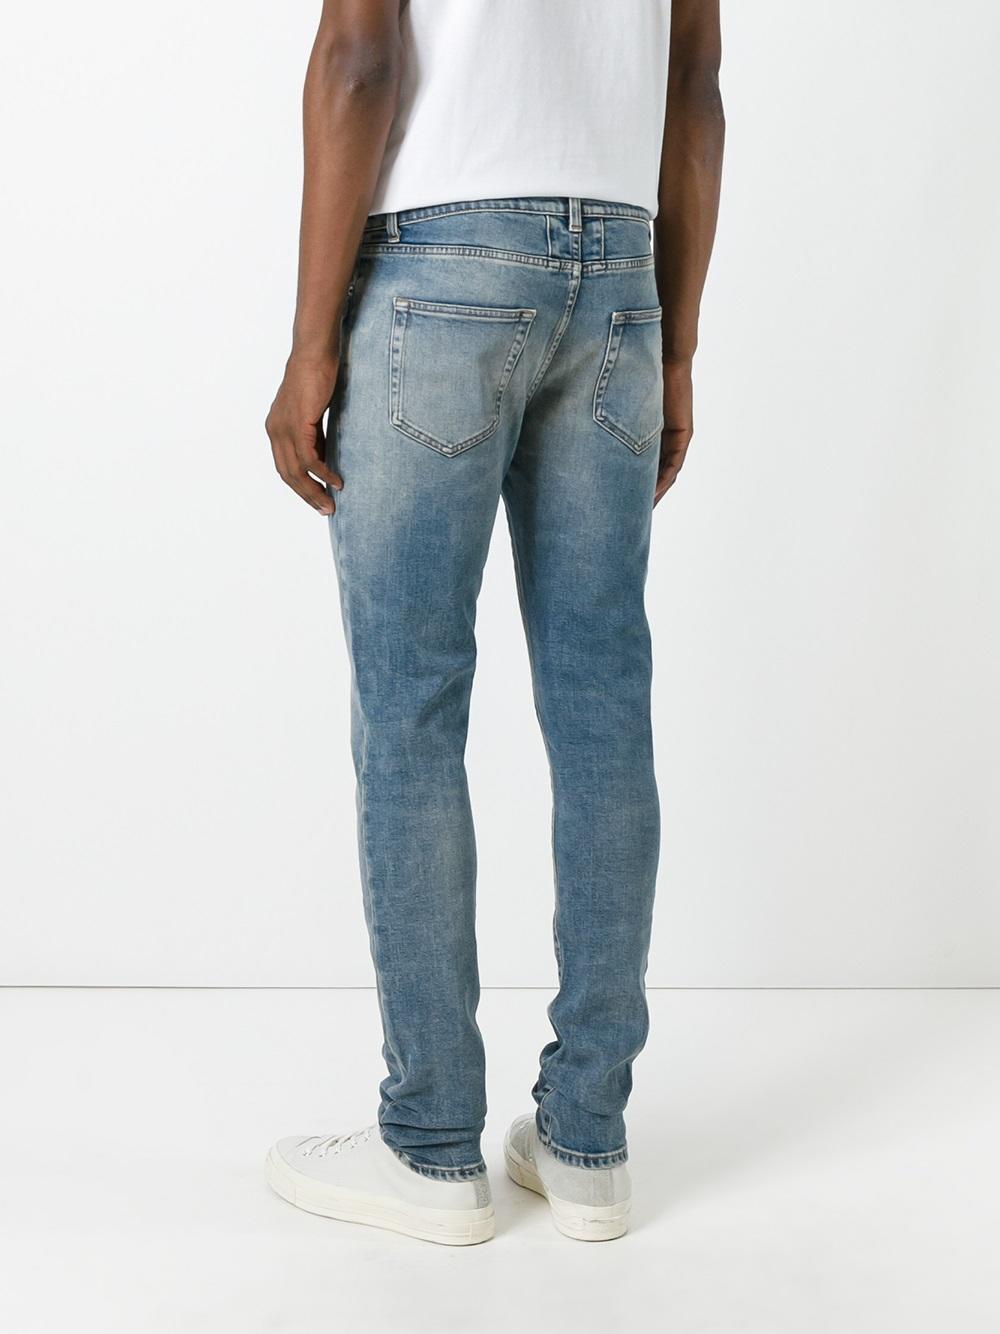 Lyst - Saint Laurent D02 Skinny Jeans in Blue for Men